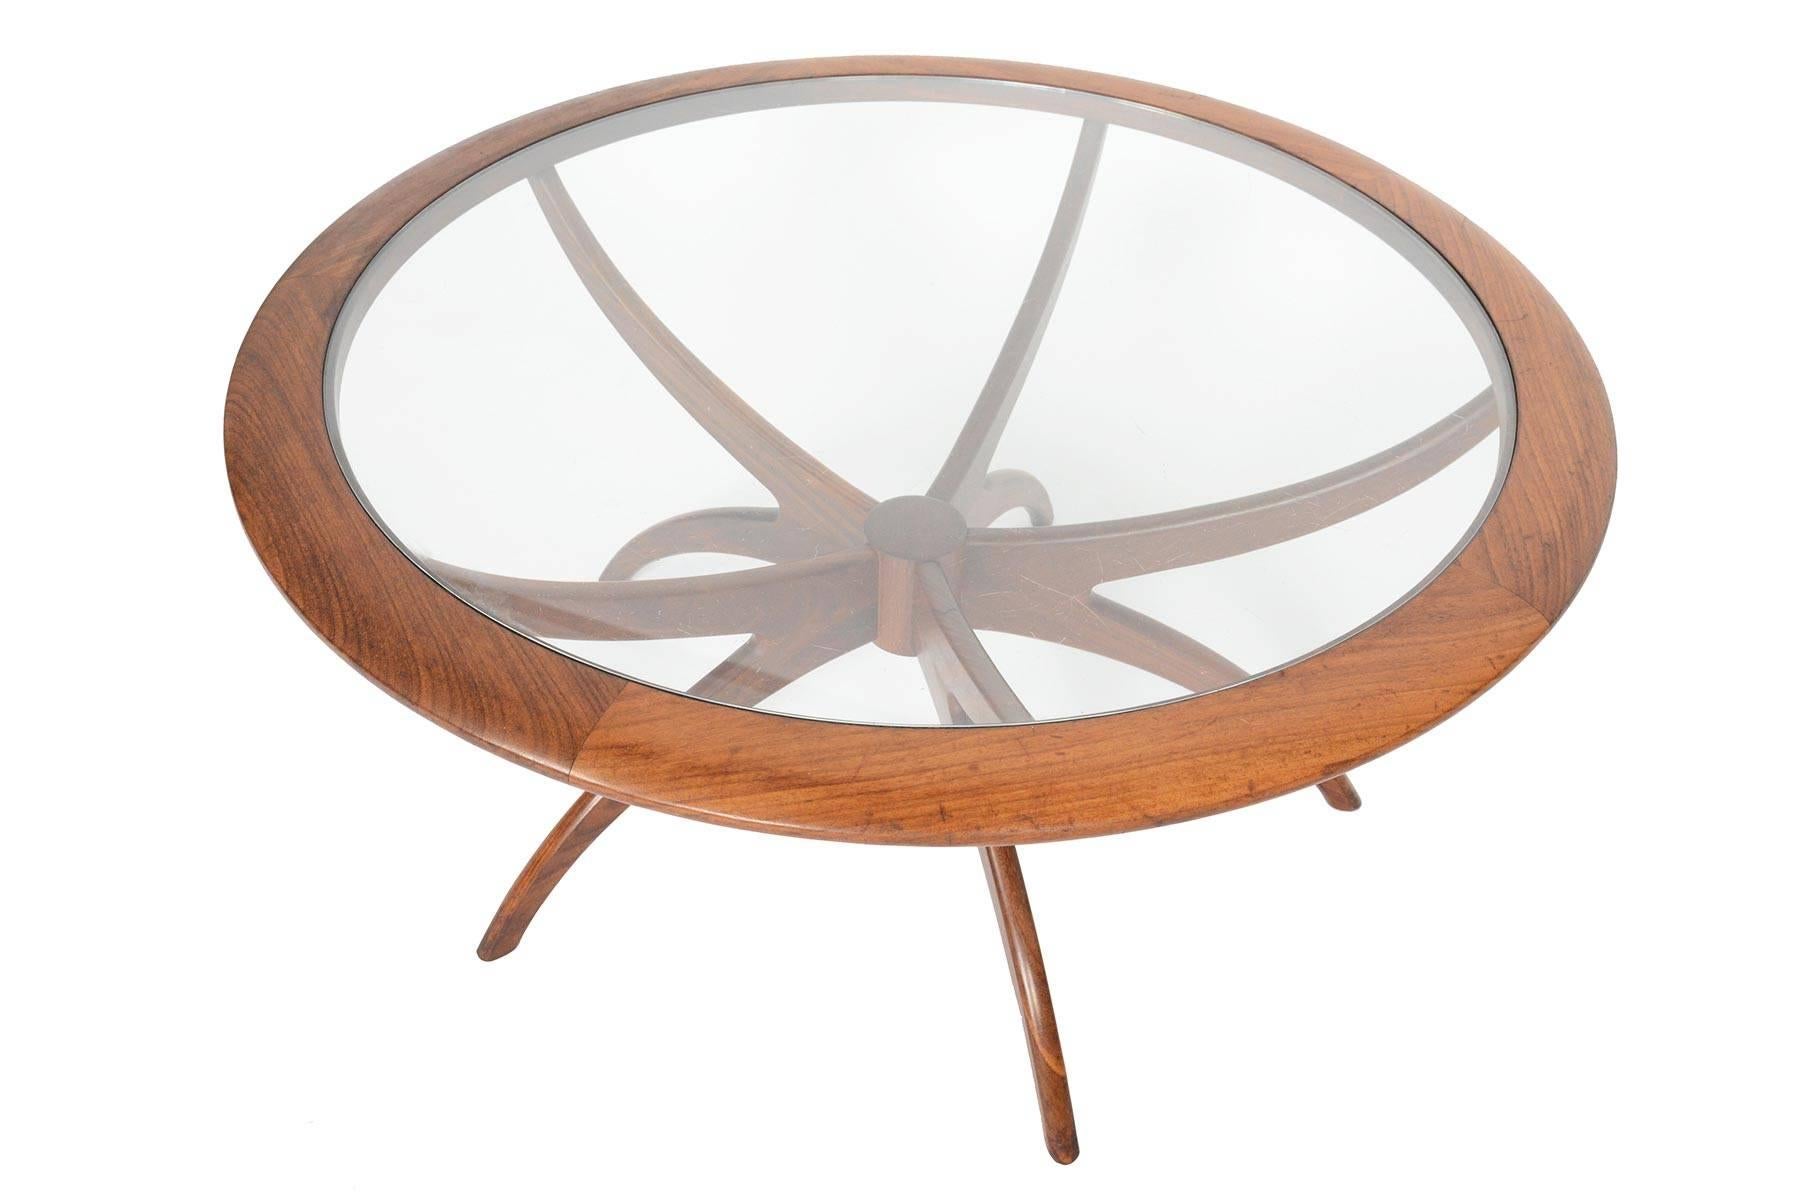 20th Century Mid-Century Modern G Plan Spider Teak and Glass Coffee Table